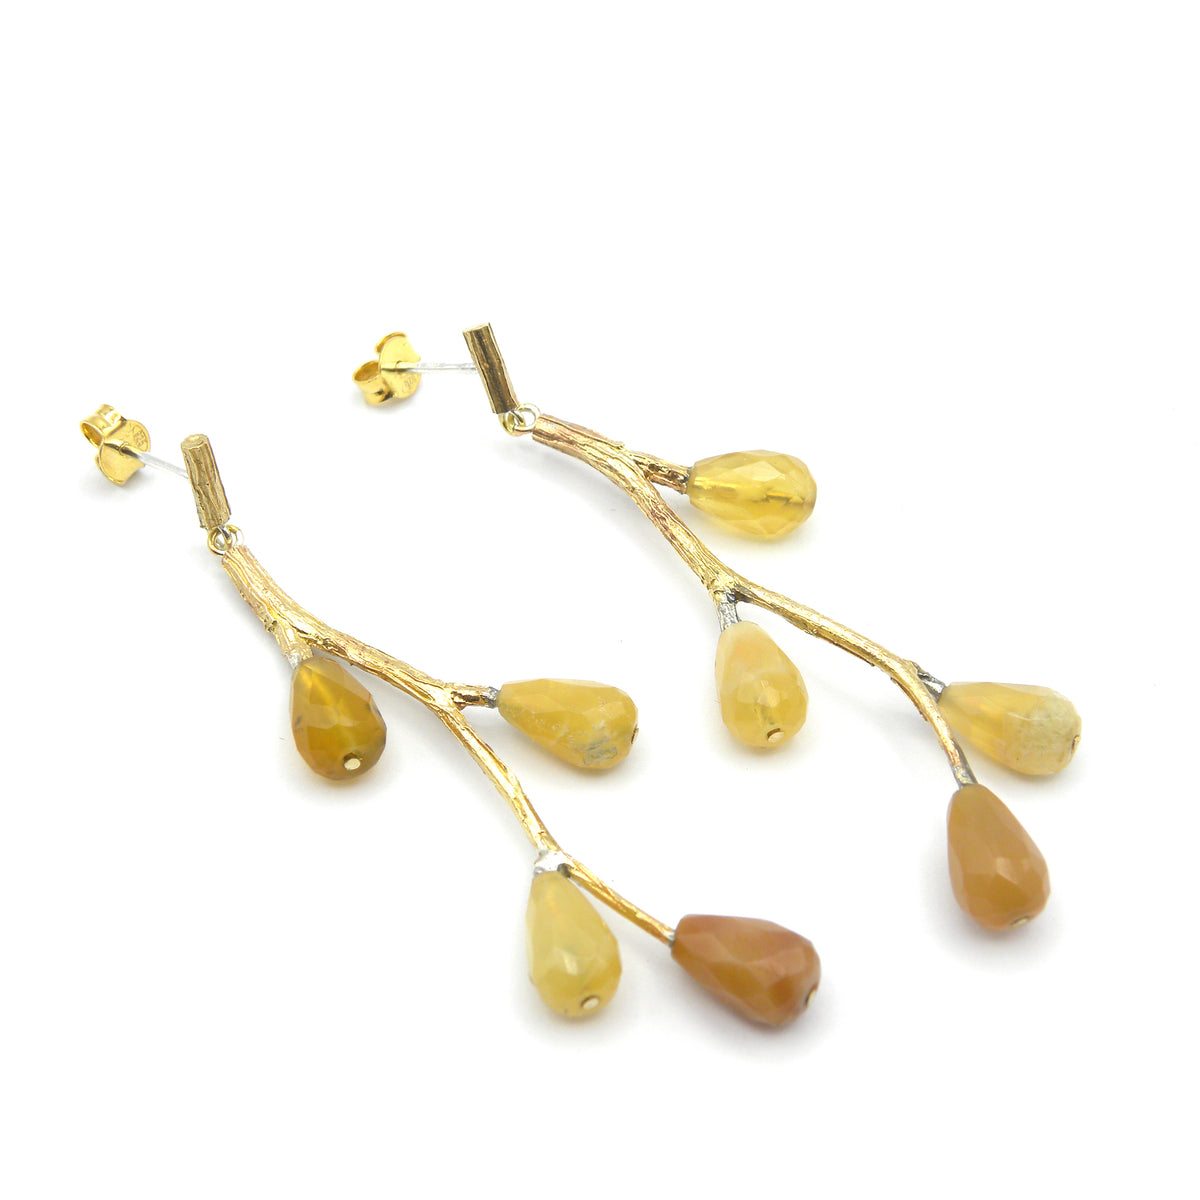 Sprig earrings with large carnelian drops